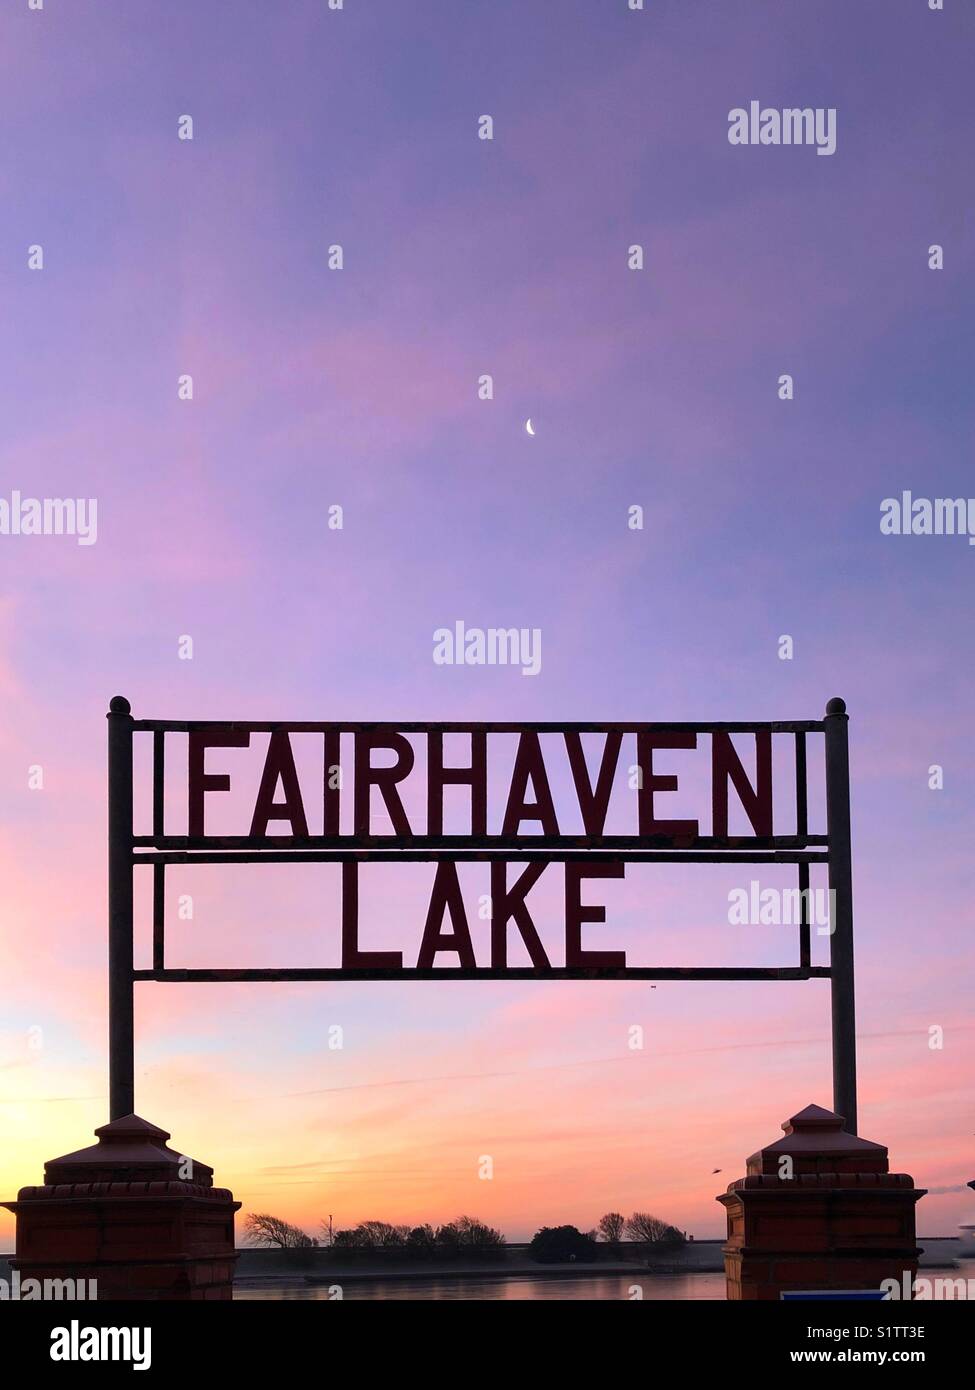 Fairheaven lake sign, Lancashire England. Credit Lee Ramsden / Alamy Stock Photo